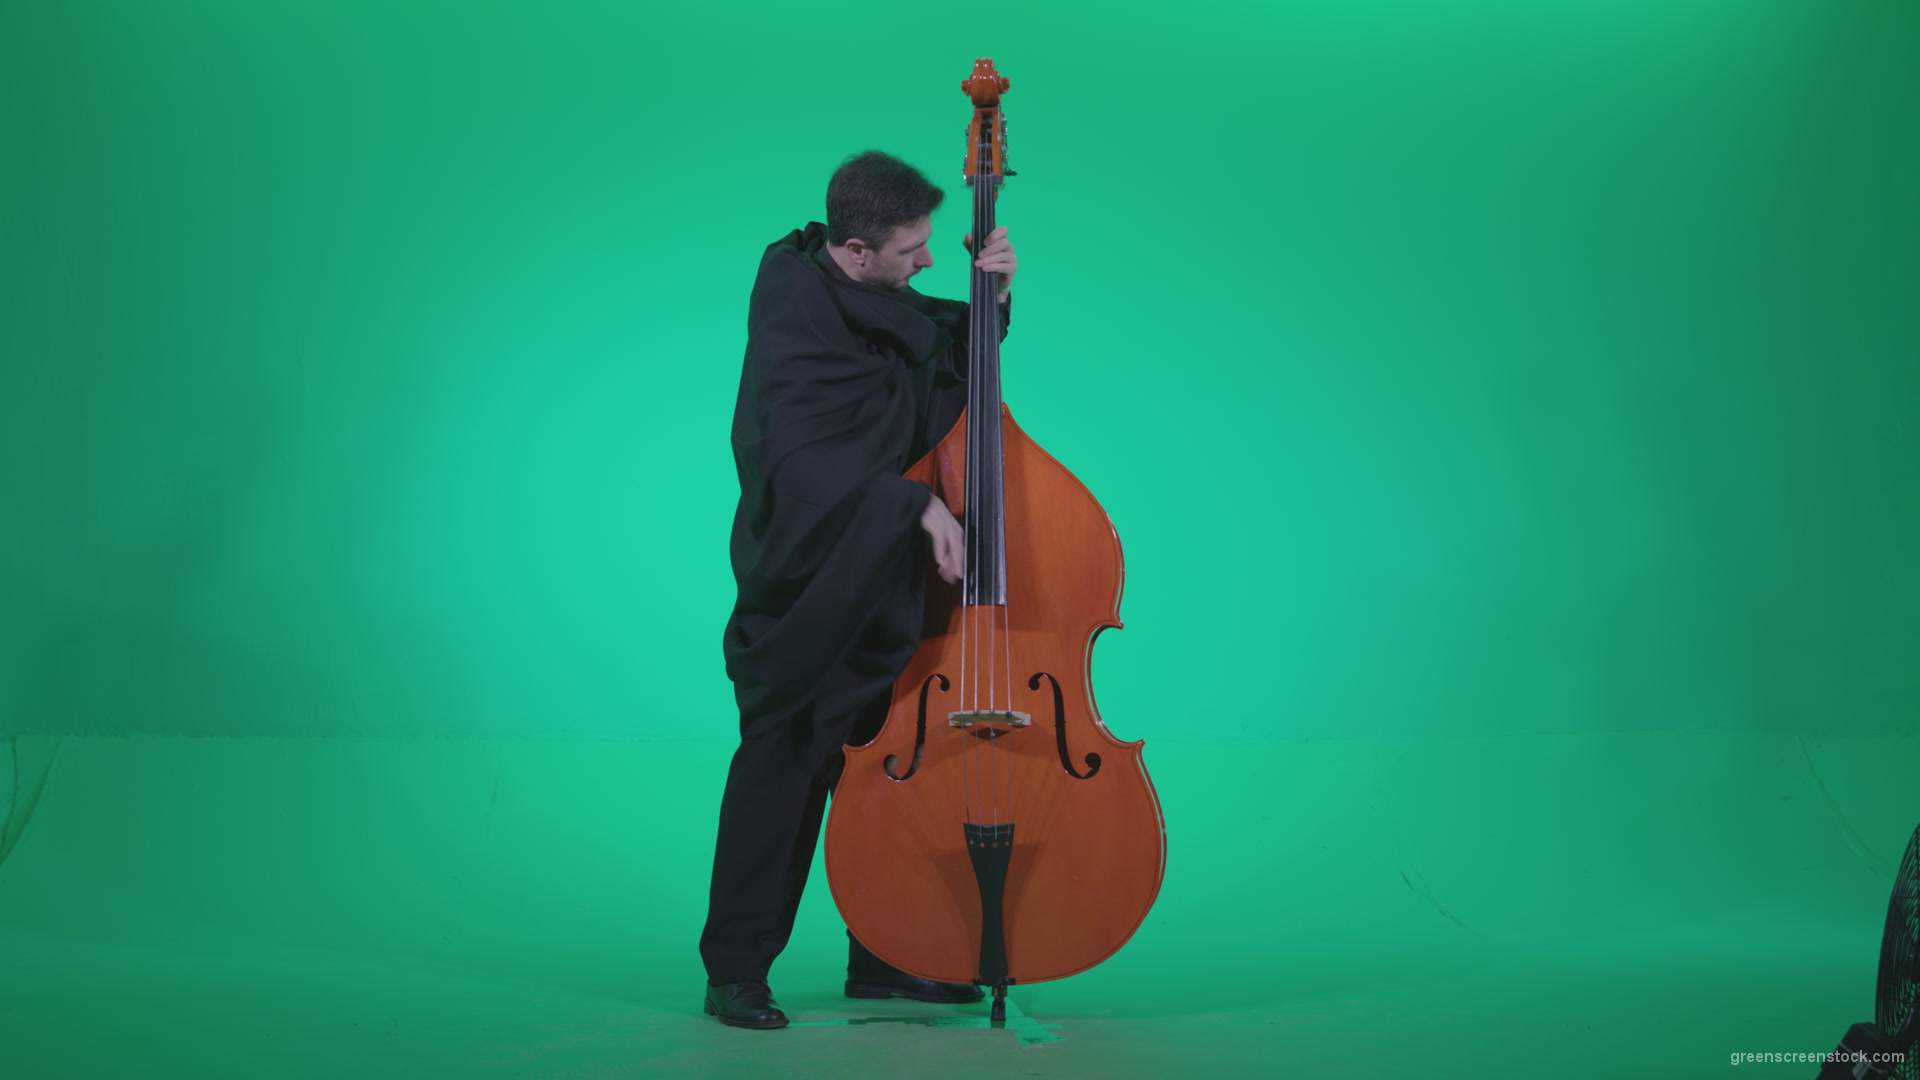 Gotic-Contrabass-Jazz-Performer-1_007 Green Screen Stock